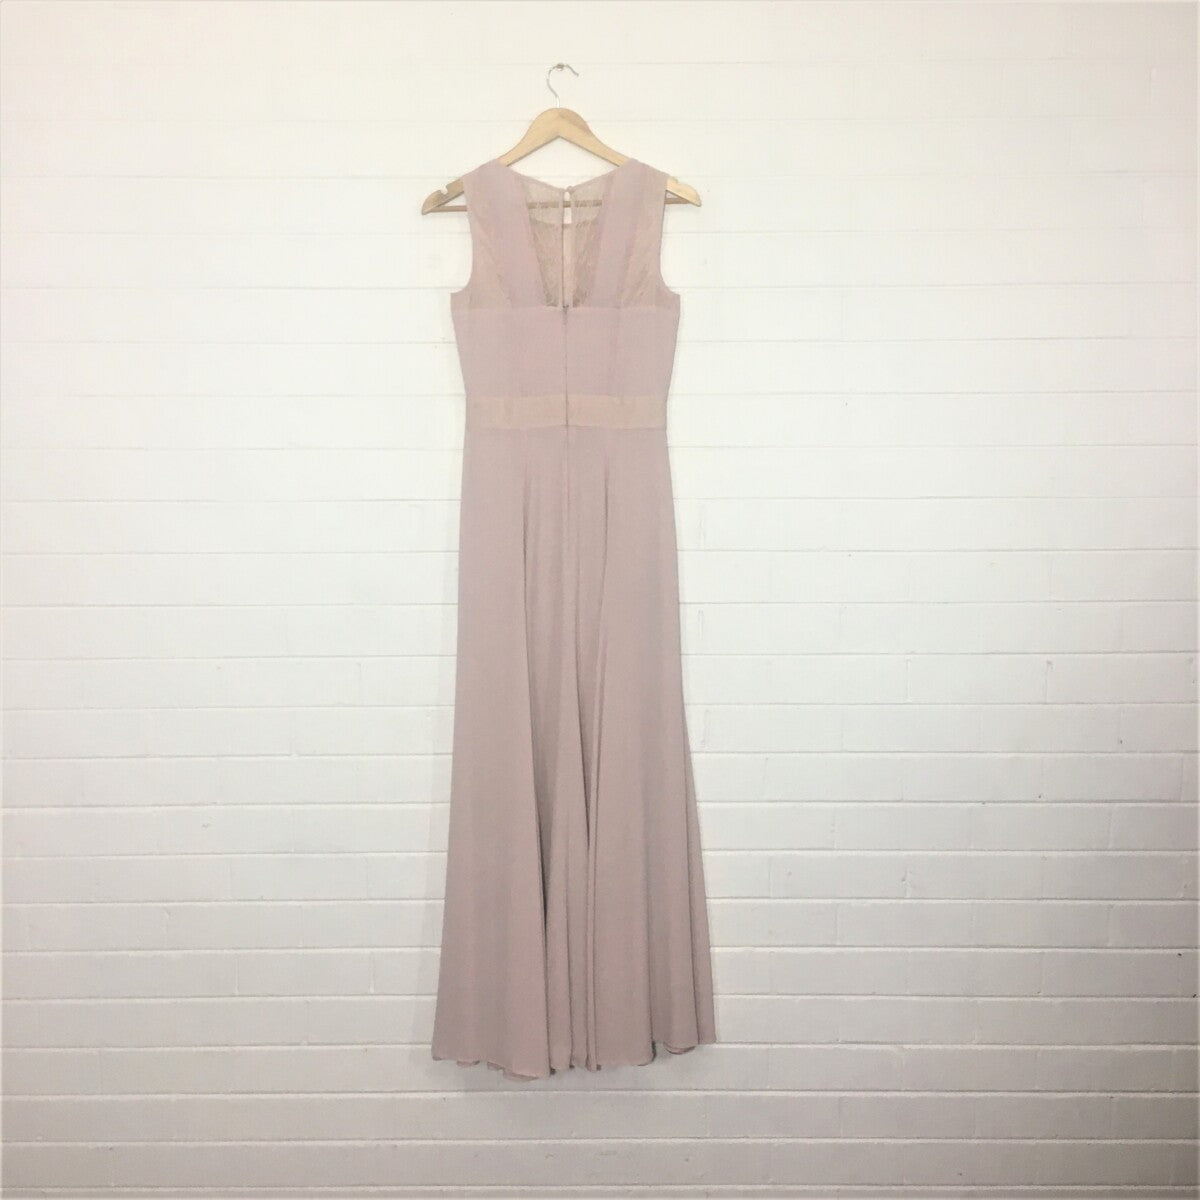 Review | dress | size 8 | maxi length